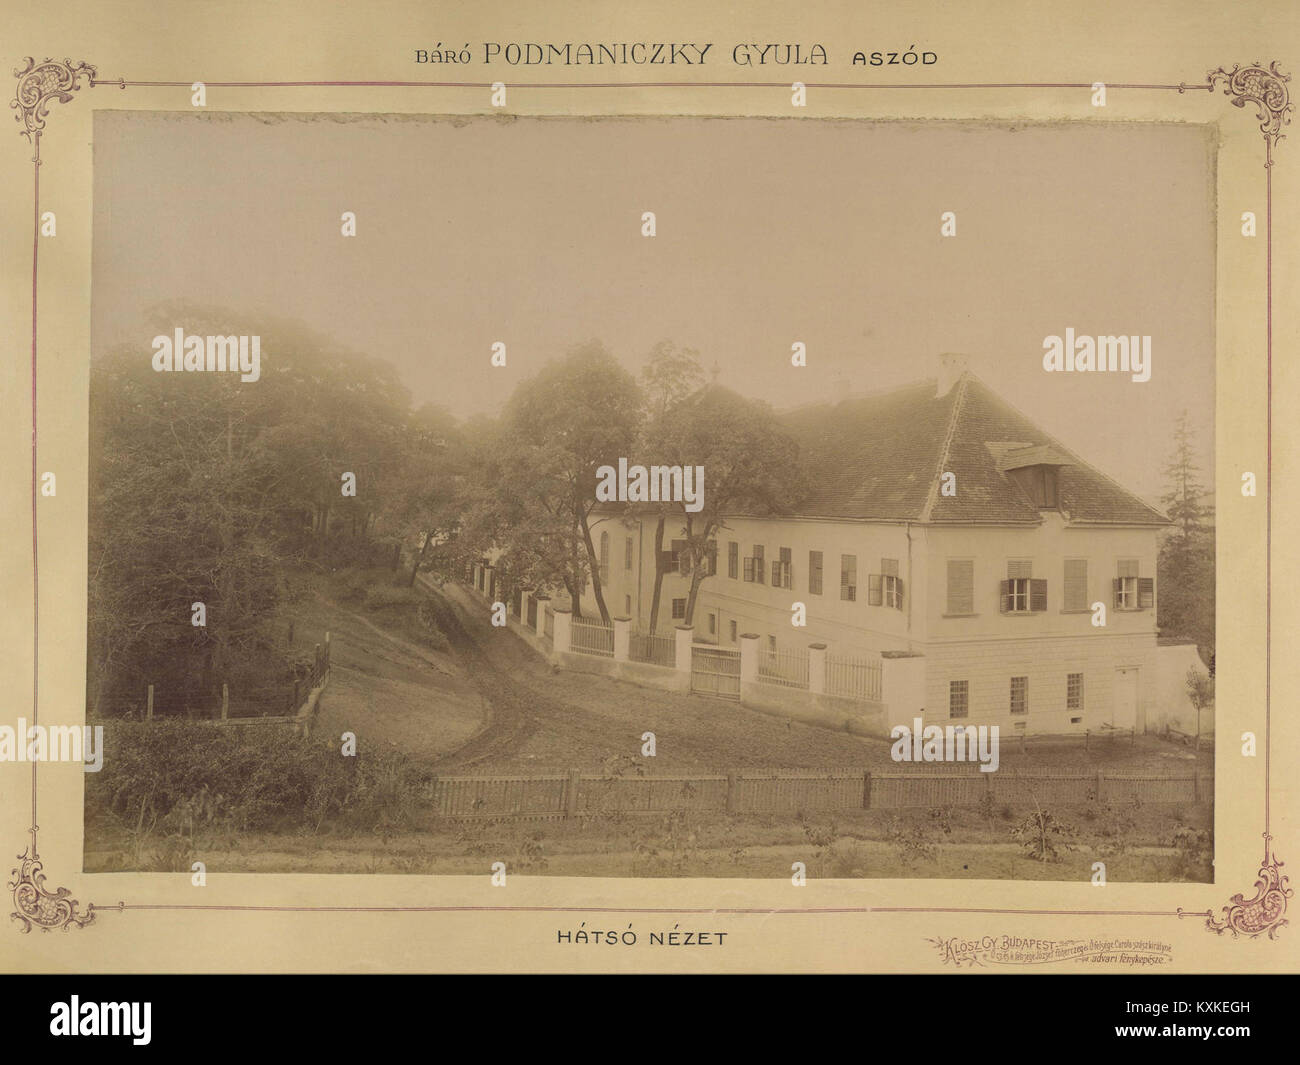 Schule, Pest Megye. Ein podmaniczky - kastély hátsó között nézete, 1895-1899. - Fortepan 83374 Stockfoto